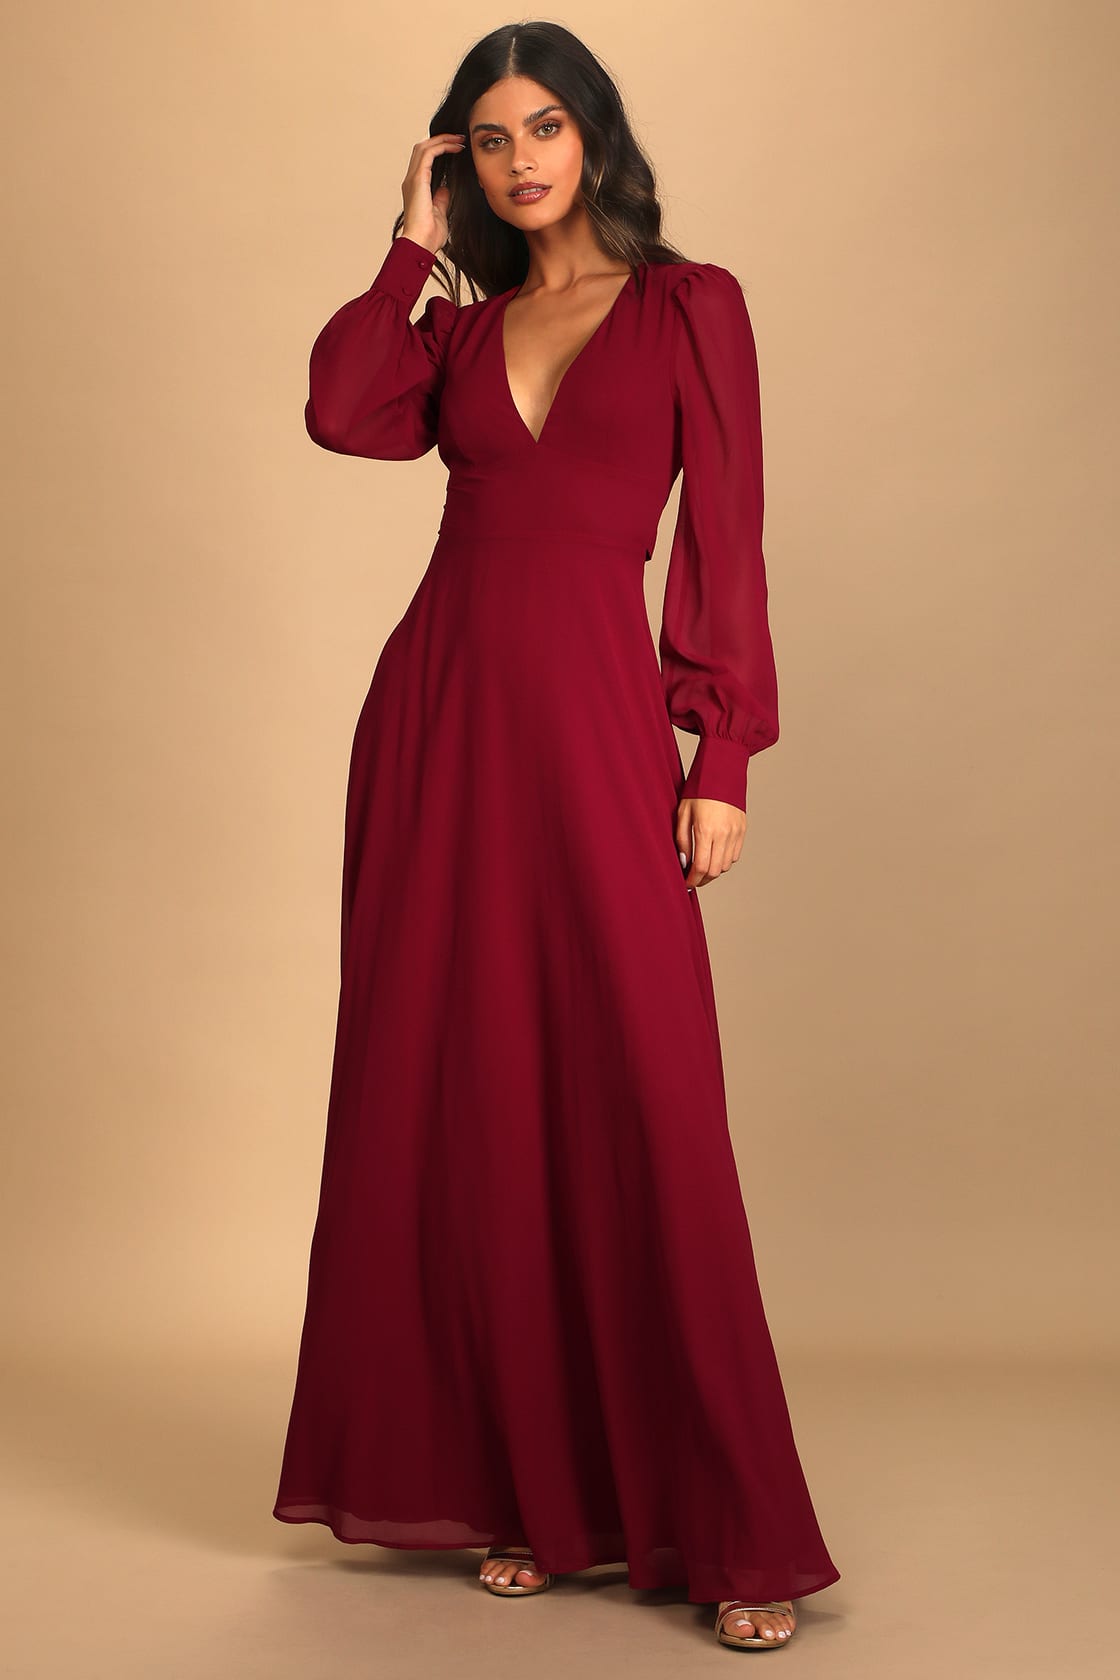 Talk About Divine Burgundy Long Sleeve Backless Maxi Dress